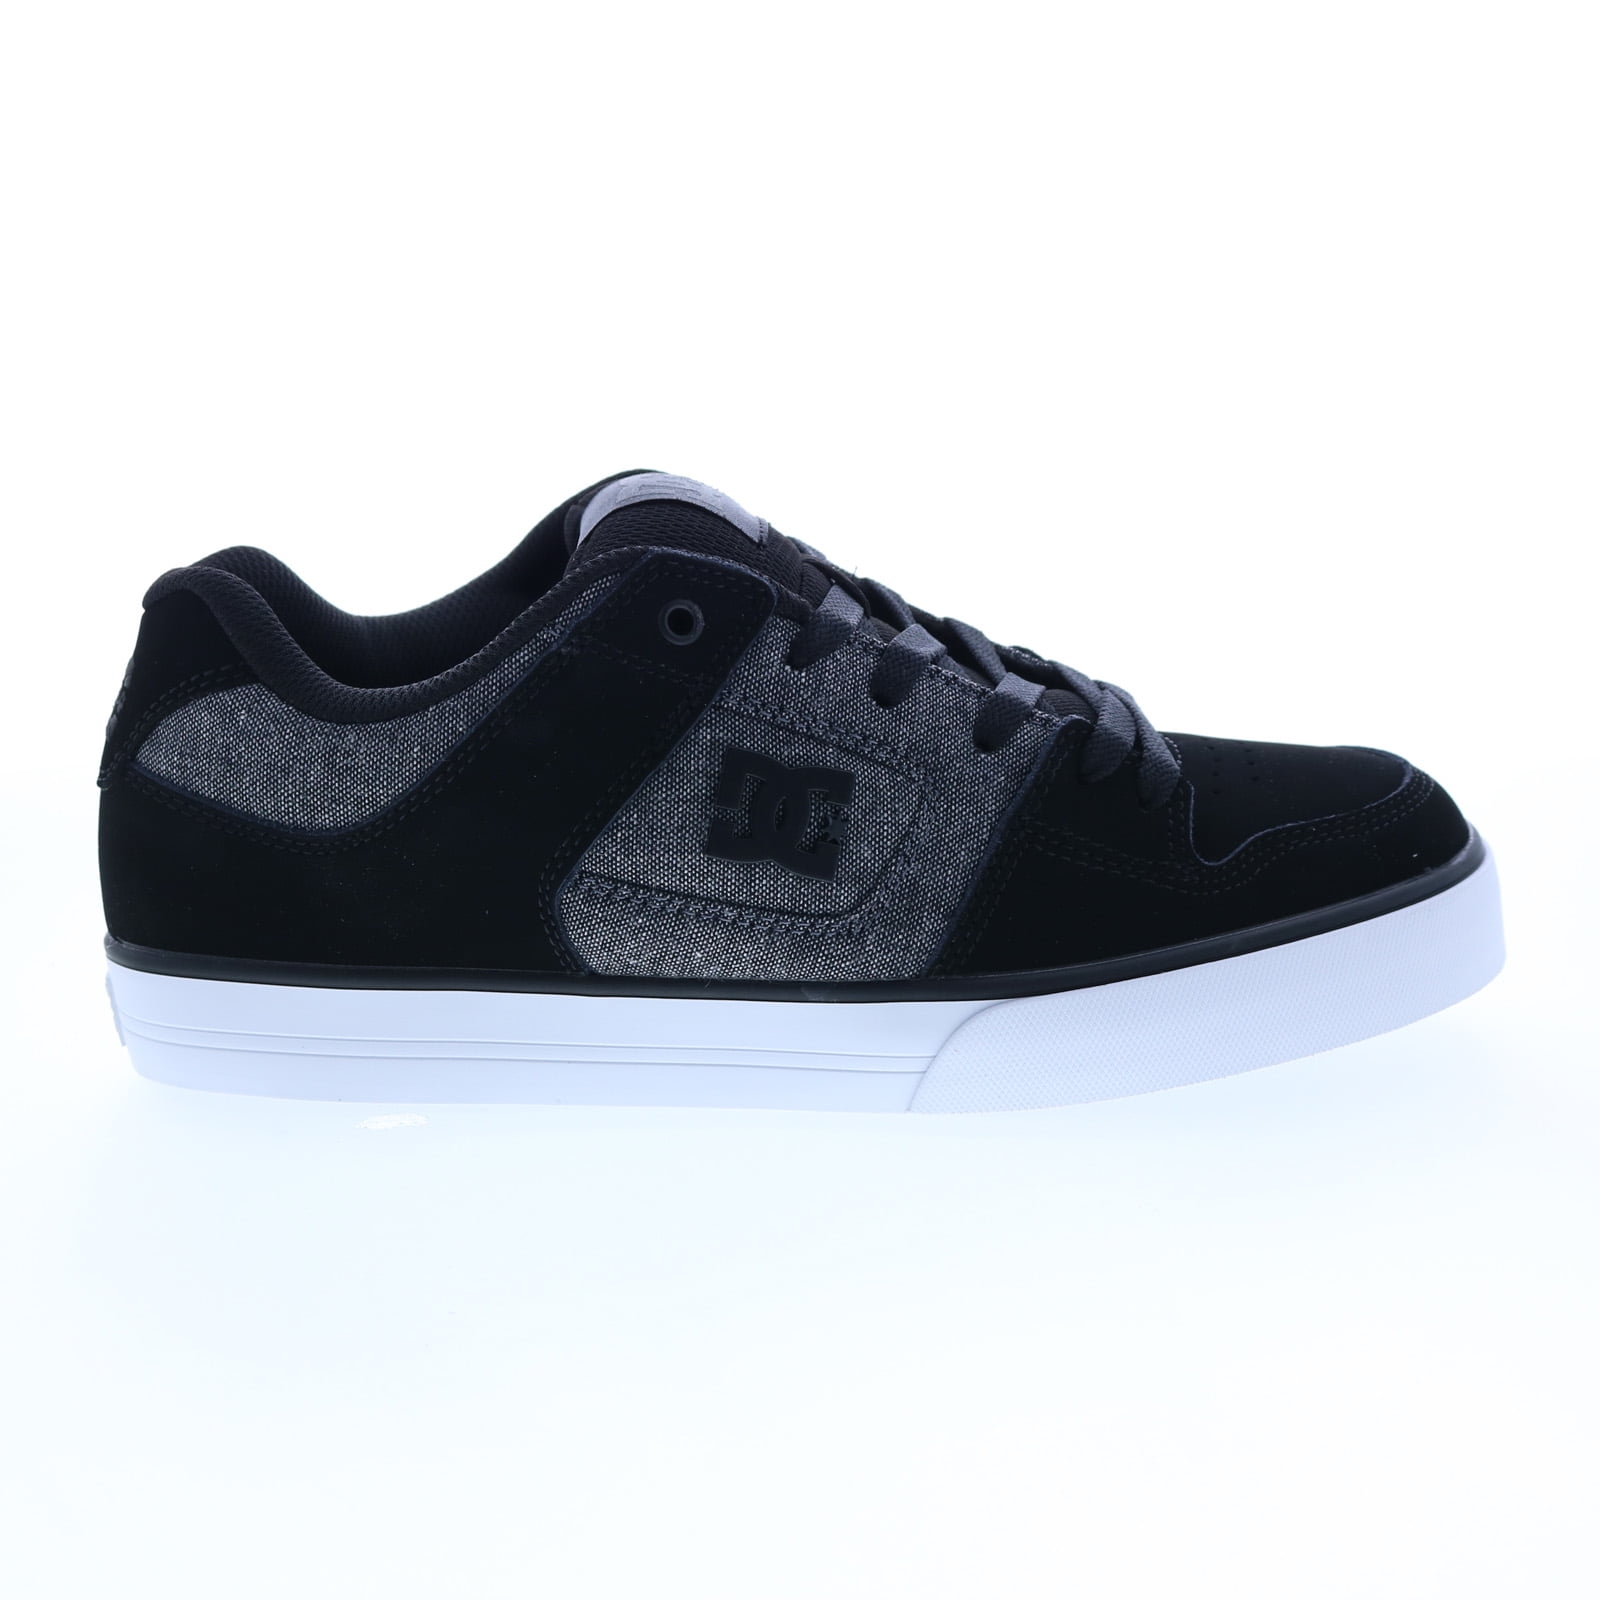 DC Shoes Men's Pure Shoes Black/Grey/Black - 300660-XKSK - Walmart.com